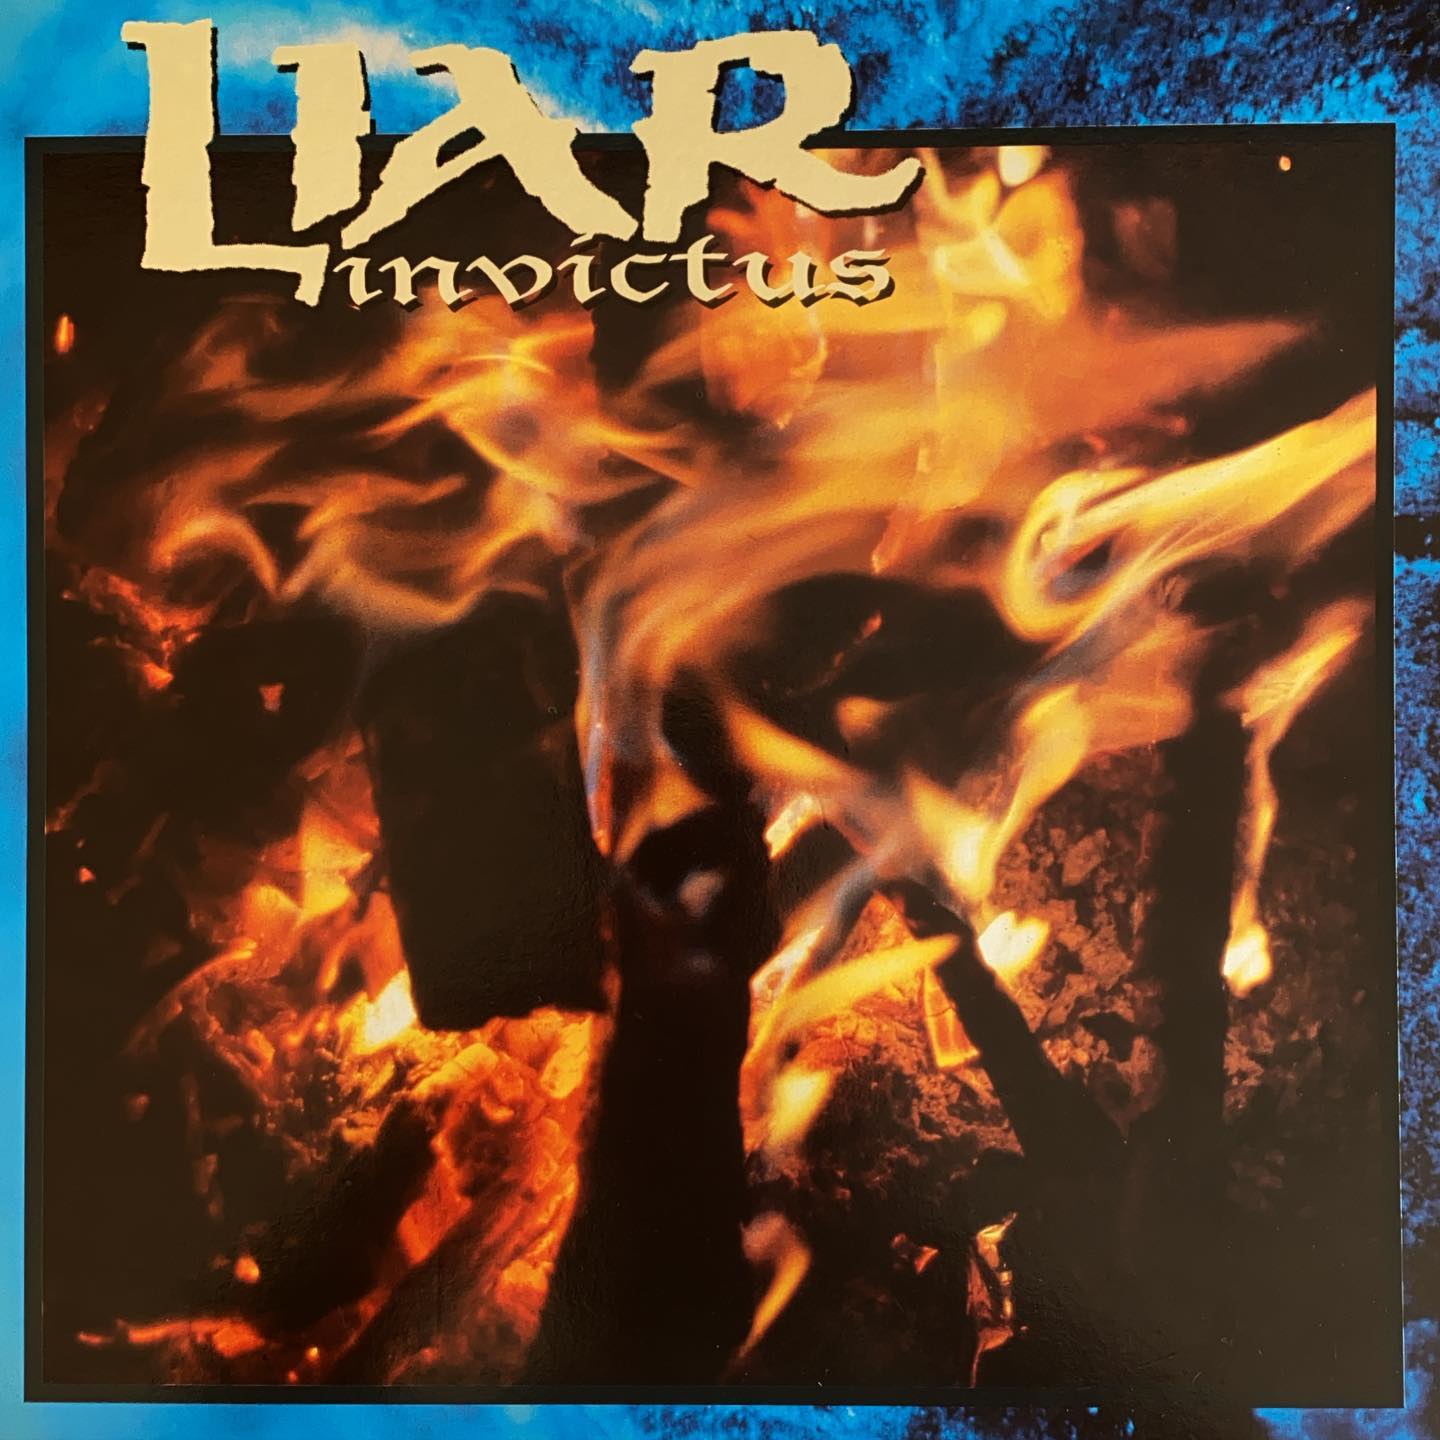 Liar - Invictus #vinyl #nowspinning #h8000 #vegan #straightedge #hardcore #metal 🤘🏻